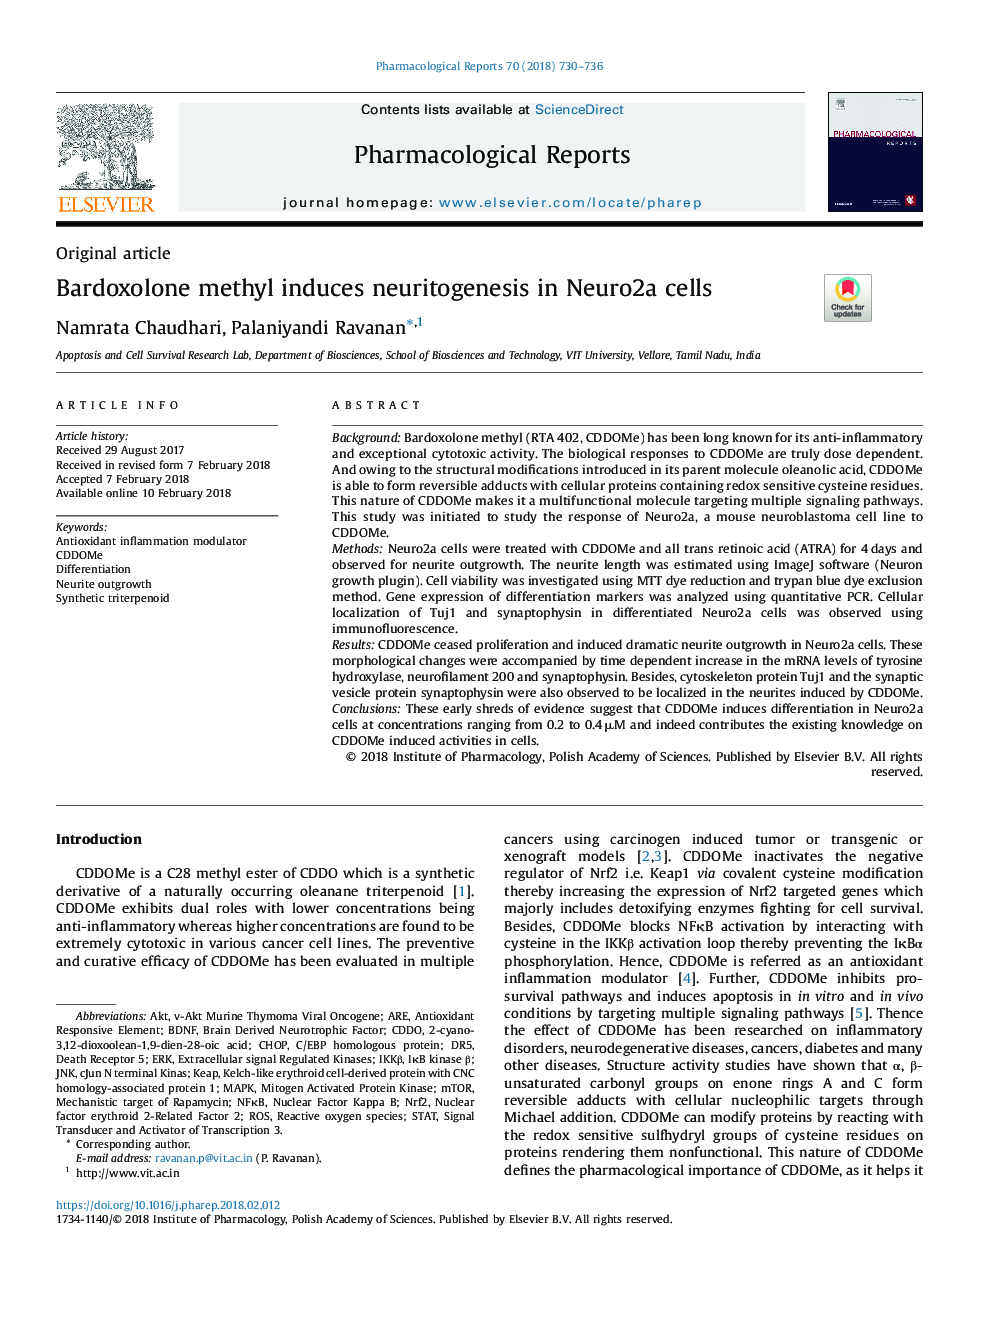 Bardoxolone methyl induces neuritogenesis in Neuro2a cells